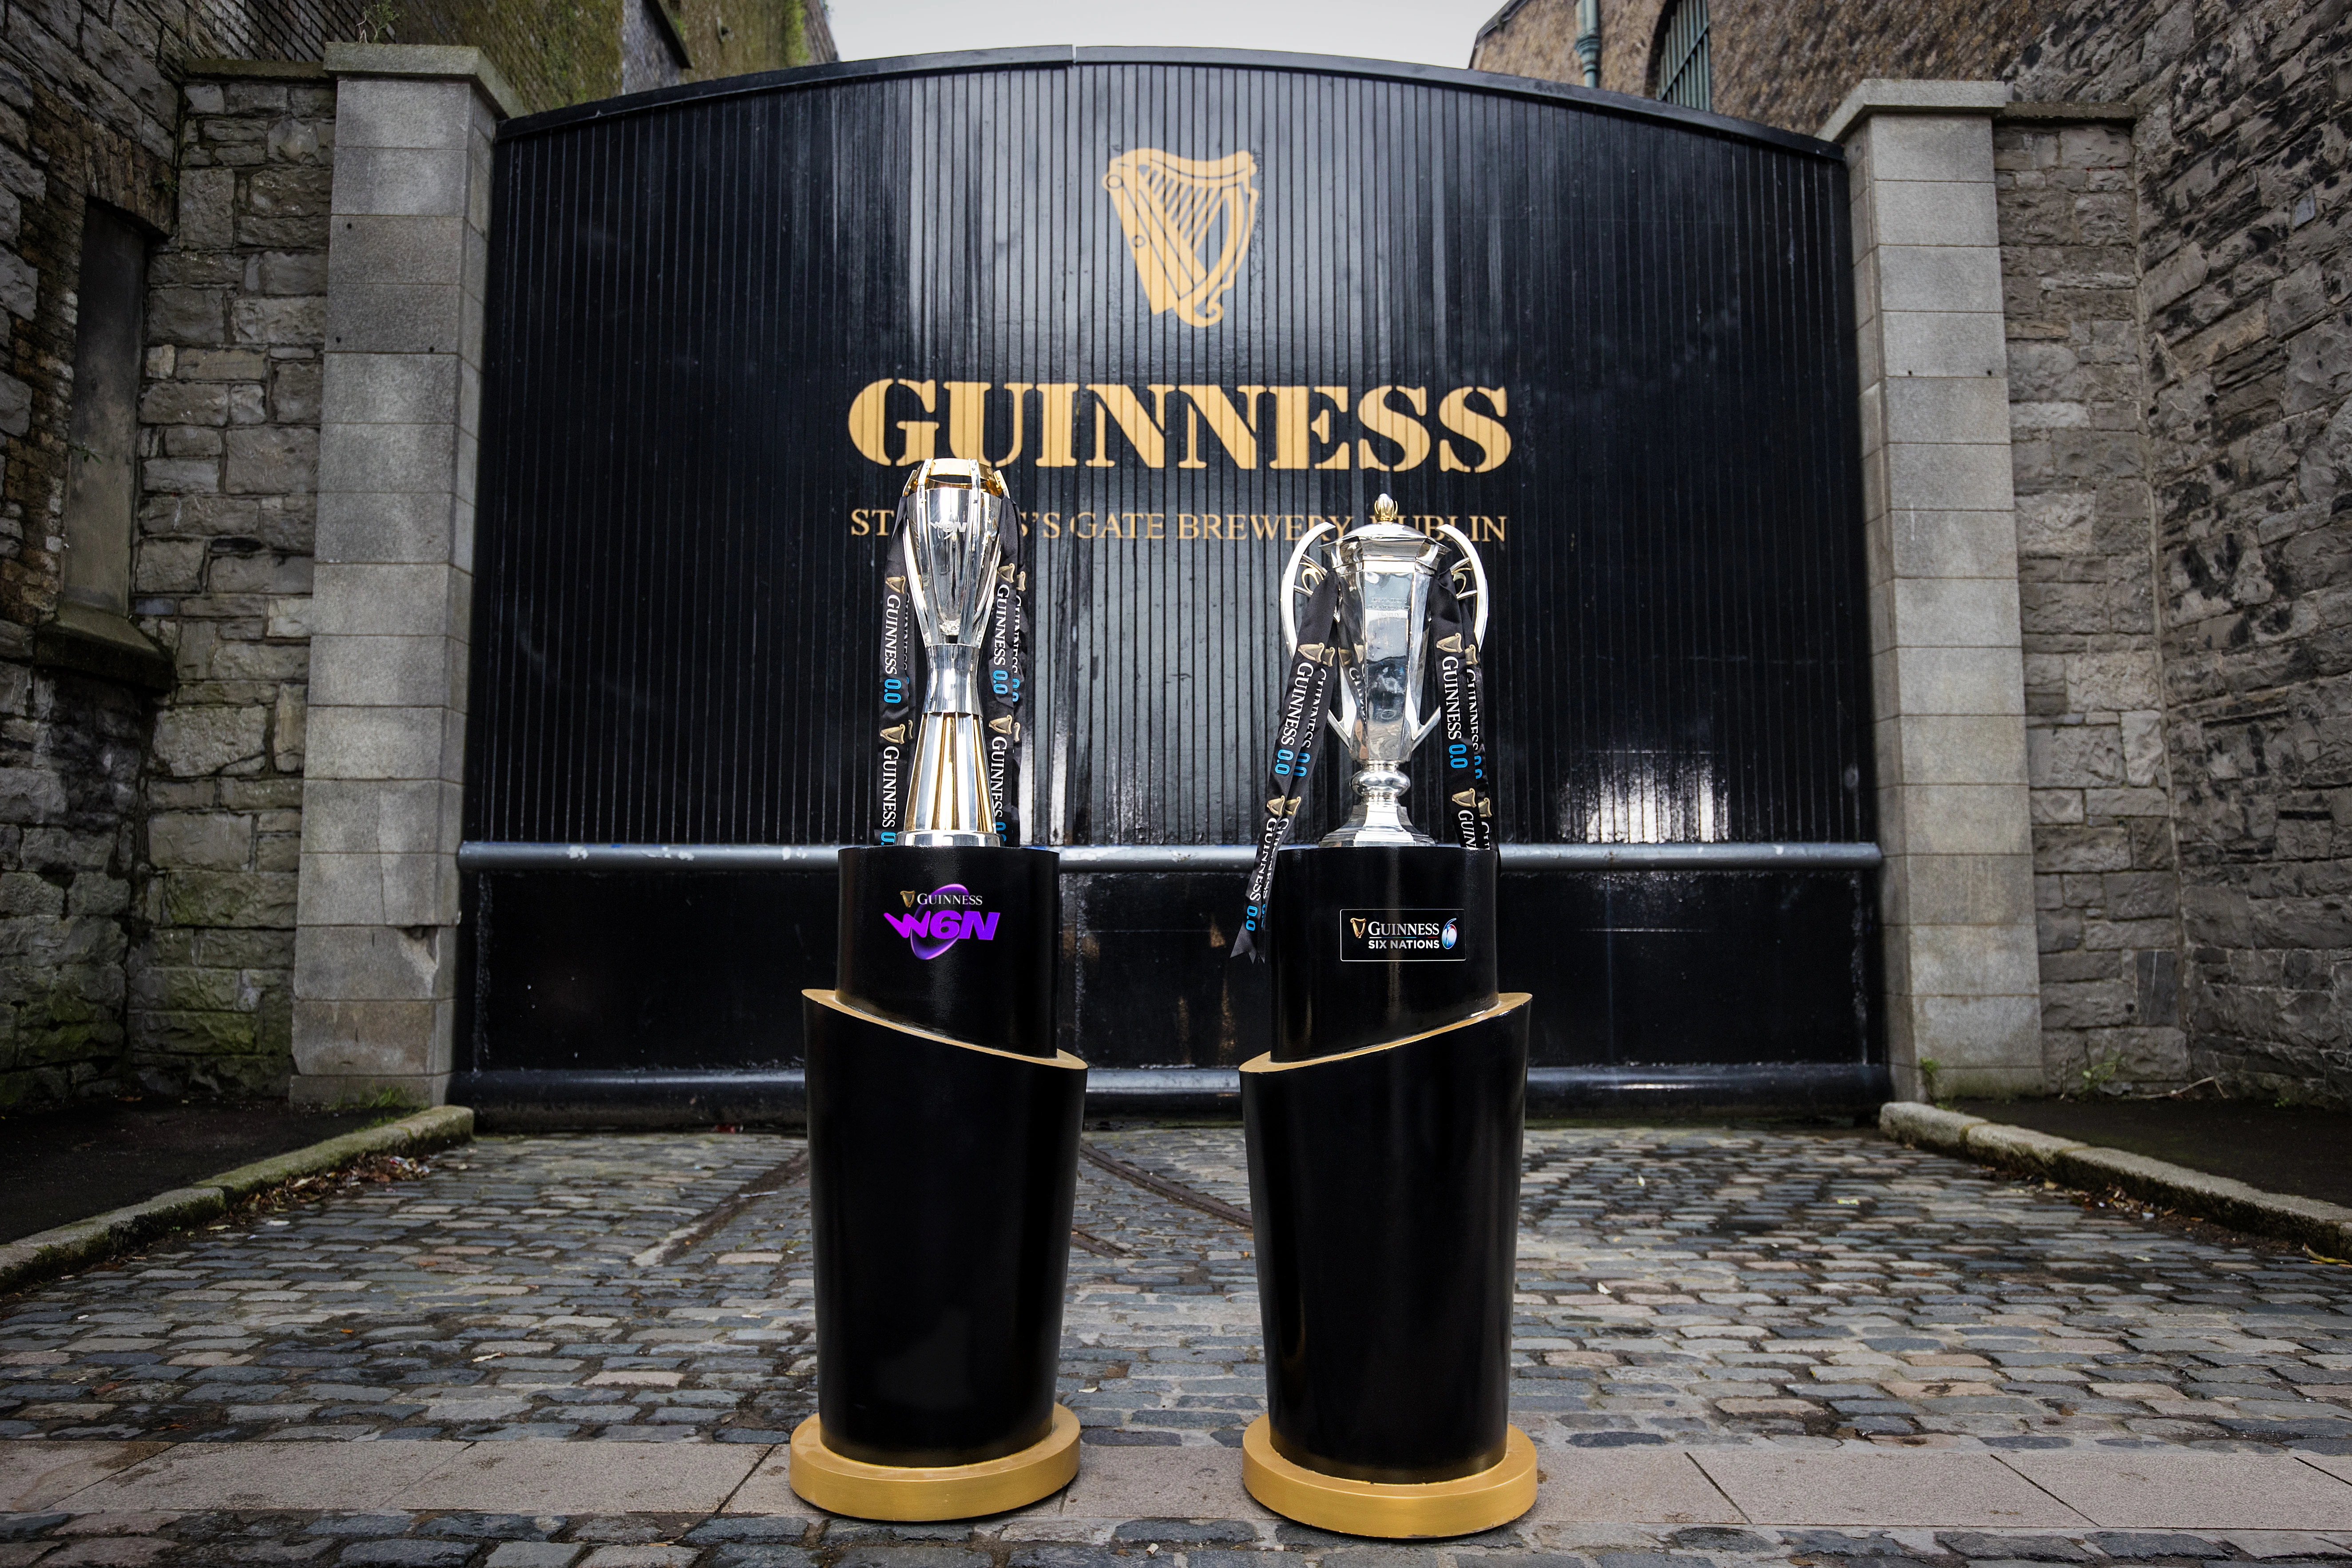 Guinness announcement - St James